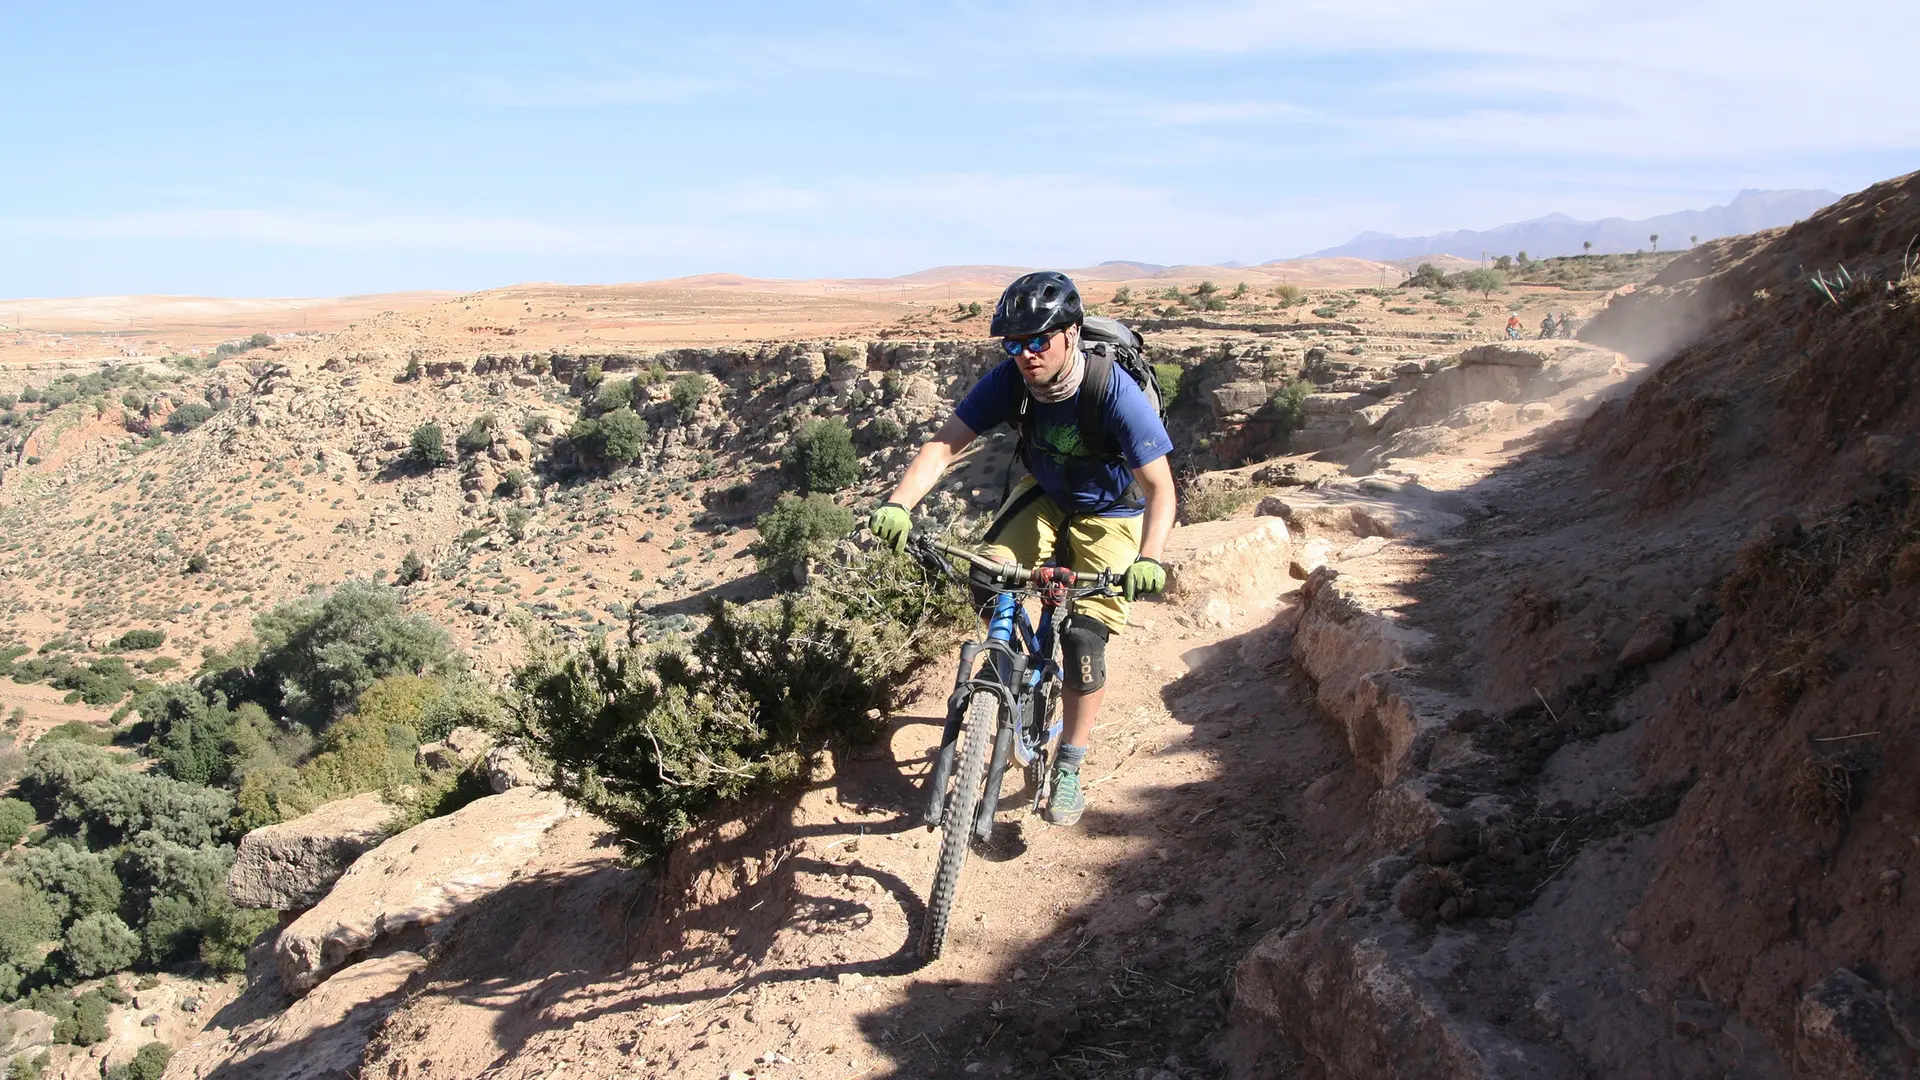 Guy riding a terrain bike on mountains wearing sunglasses. a blue shirt and a black helmet.